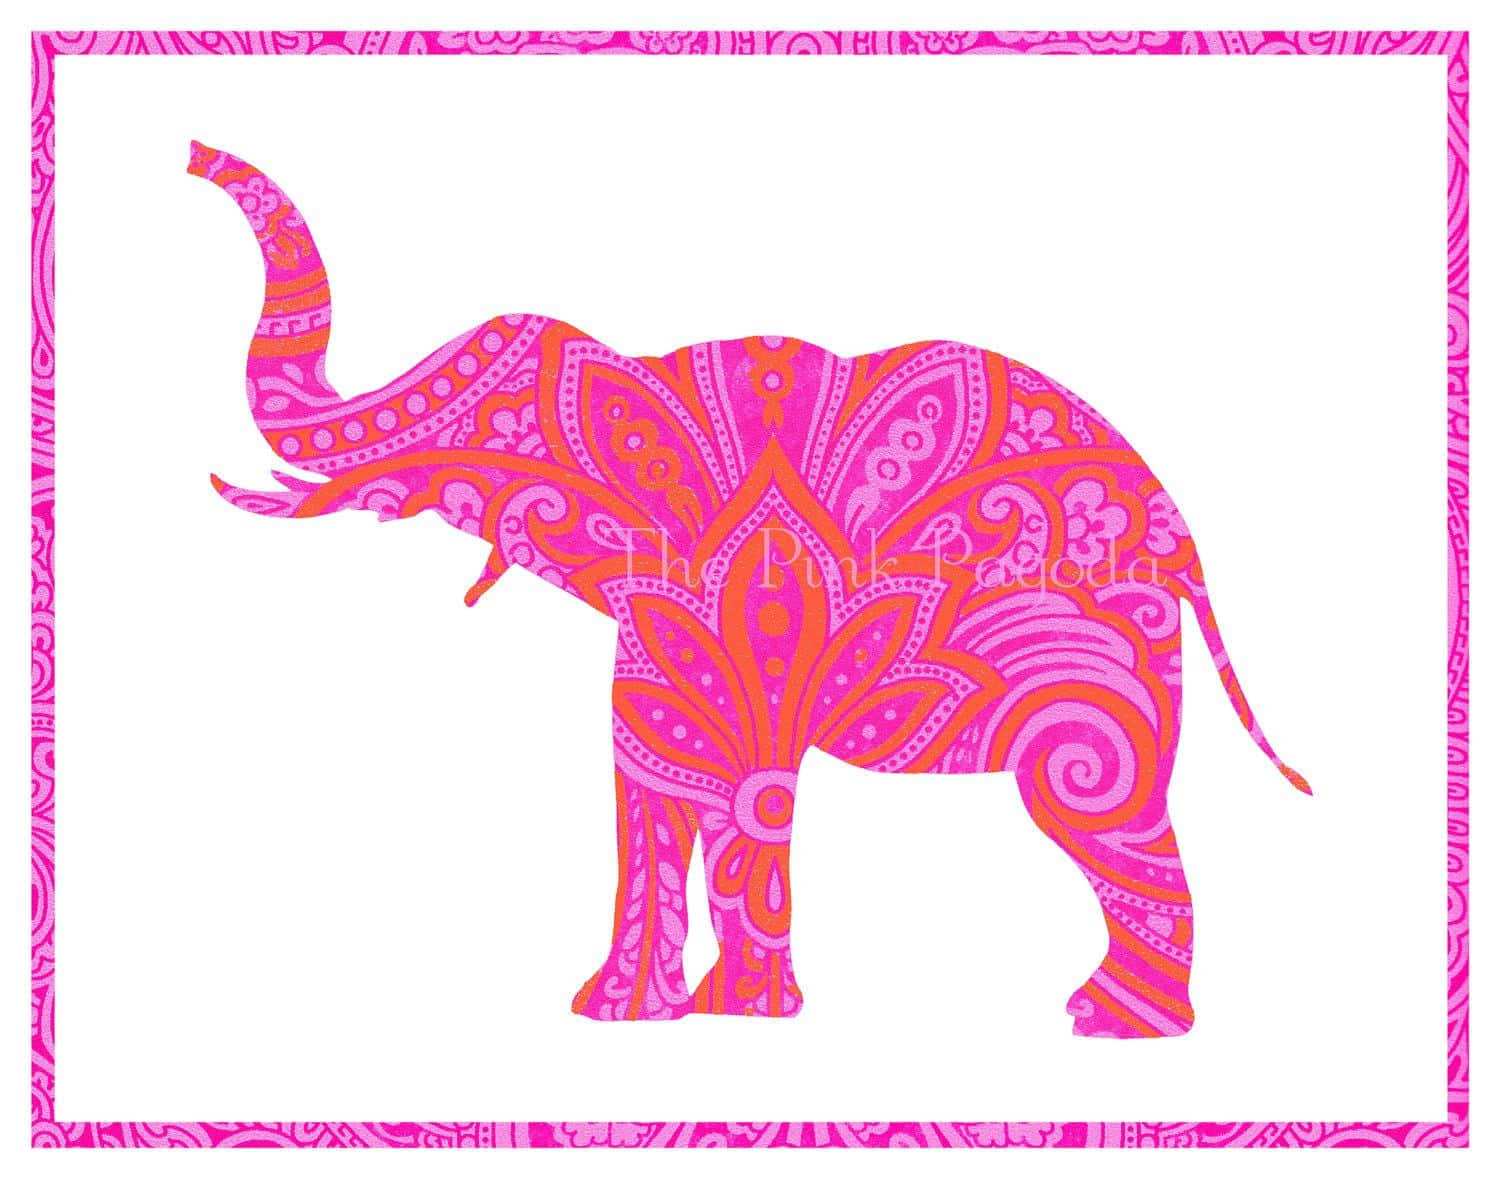 A vibrant and artistic representation of a Pink Elephant Wallpaper